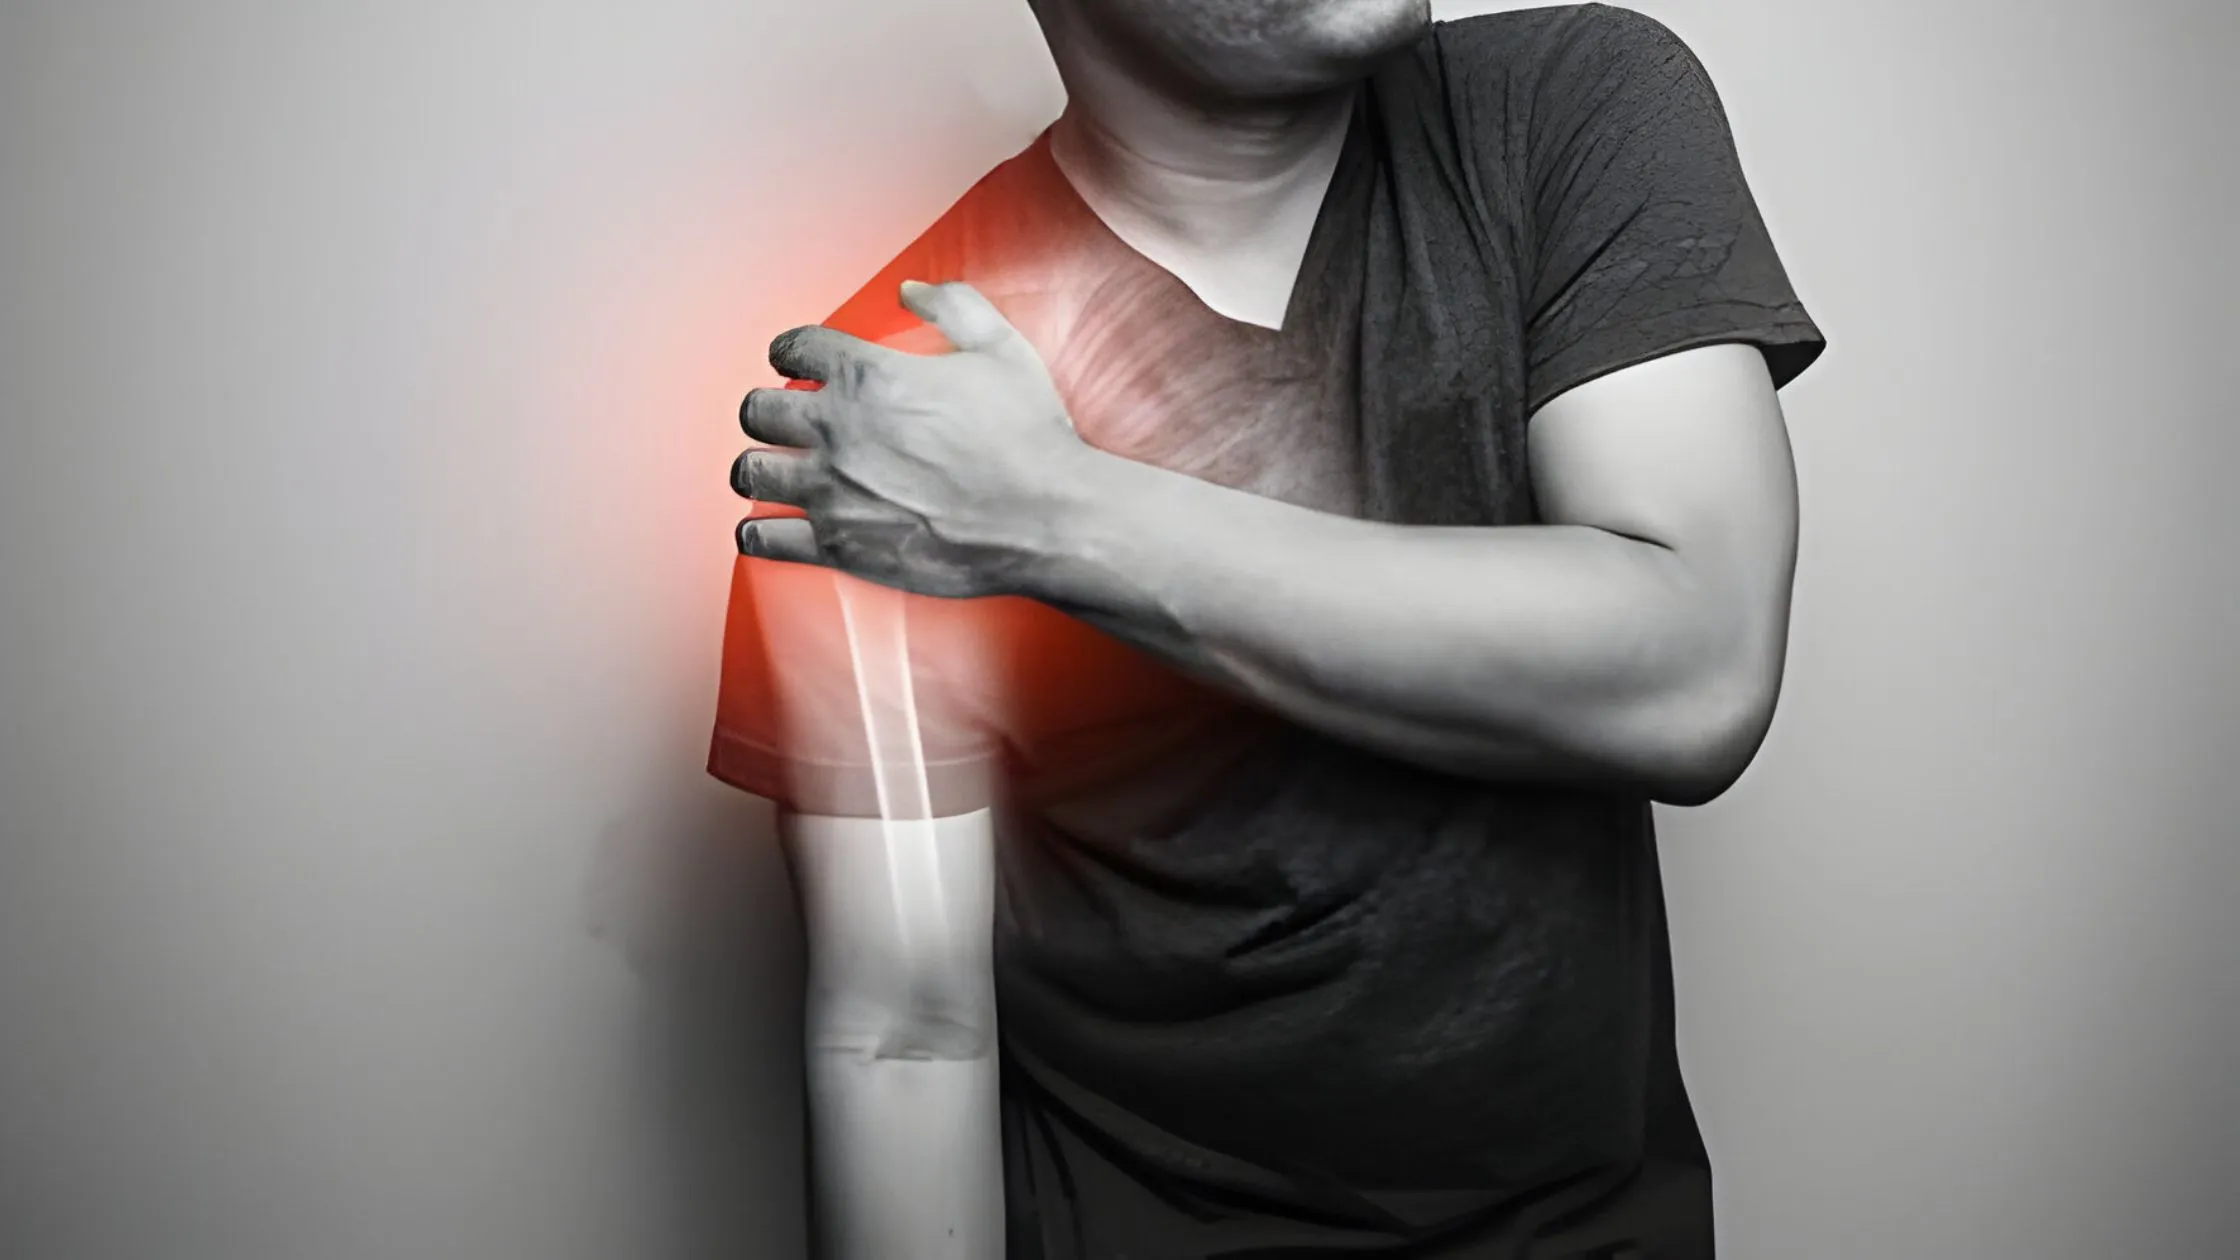 Shoulder Pain Diagnosis Chart Can Help You Diagnose Your Pain